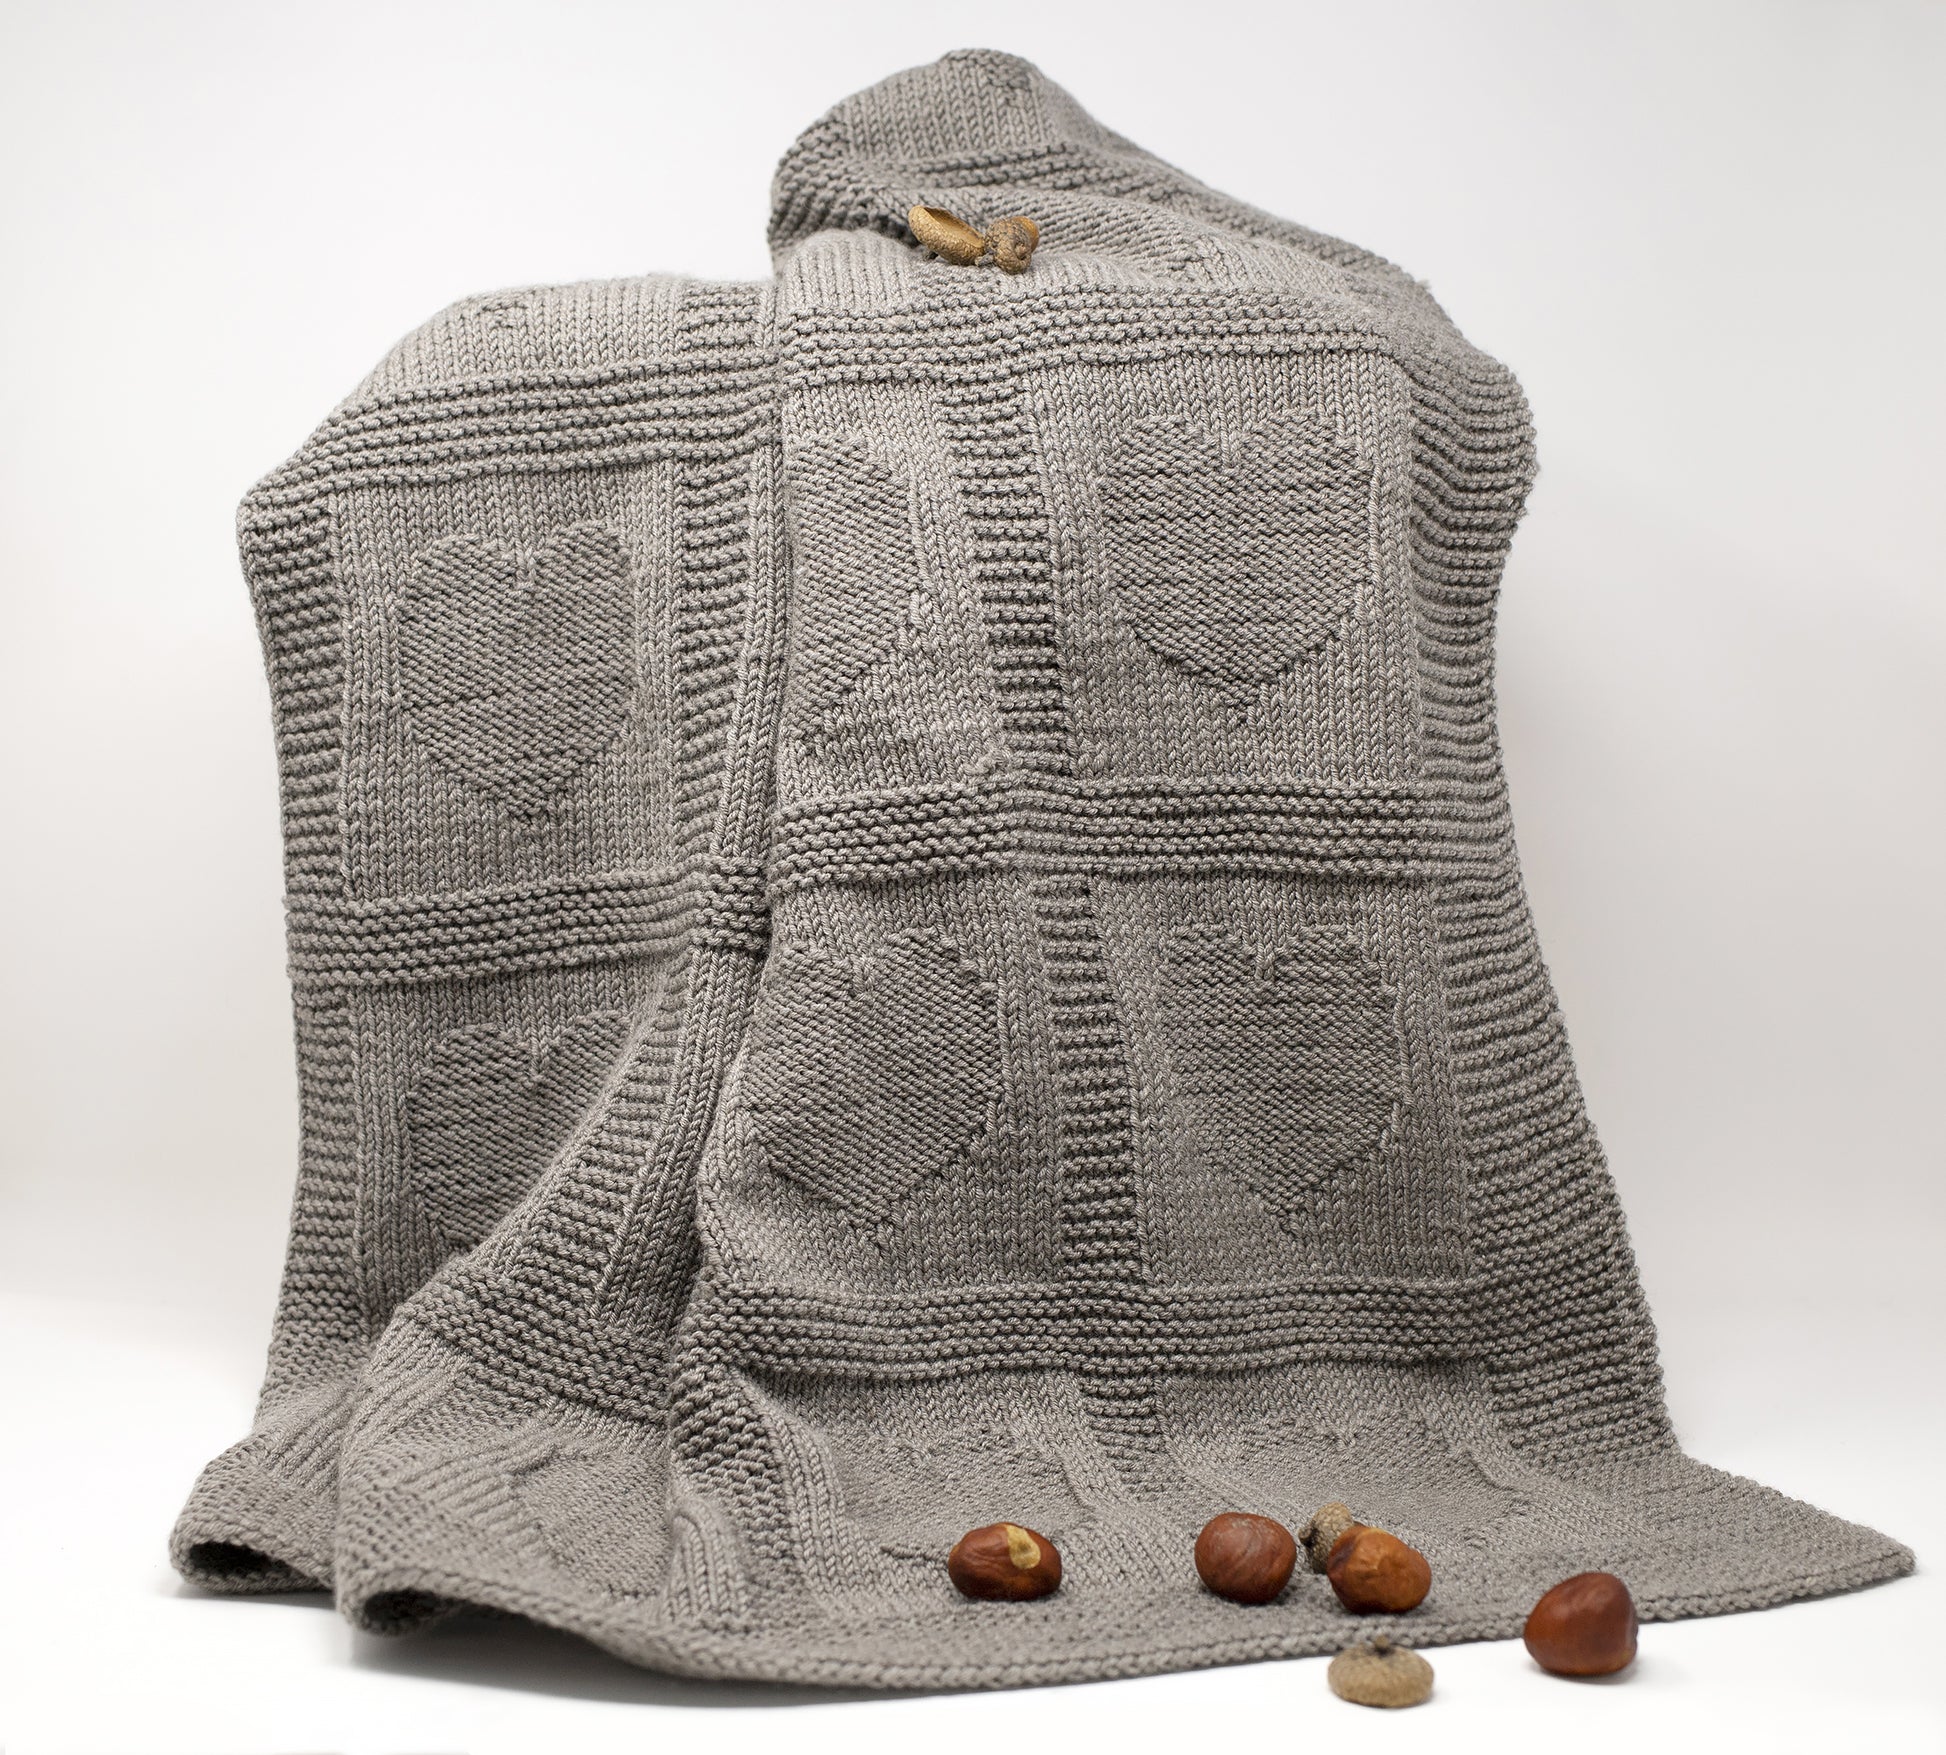 beige superwash merino wool yarn hand-knitted baby blanket in Hearts knitting pattern